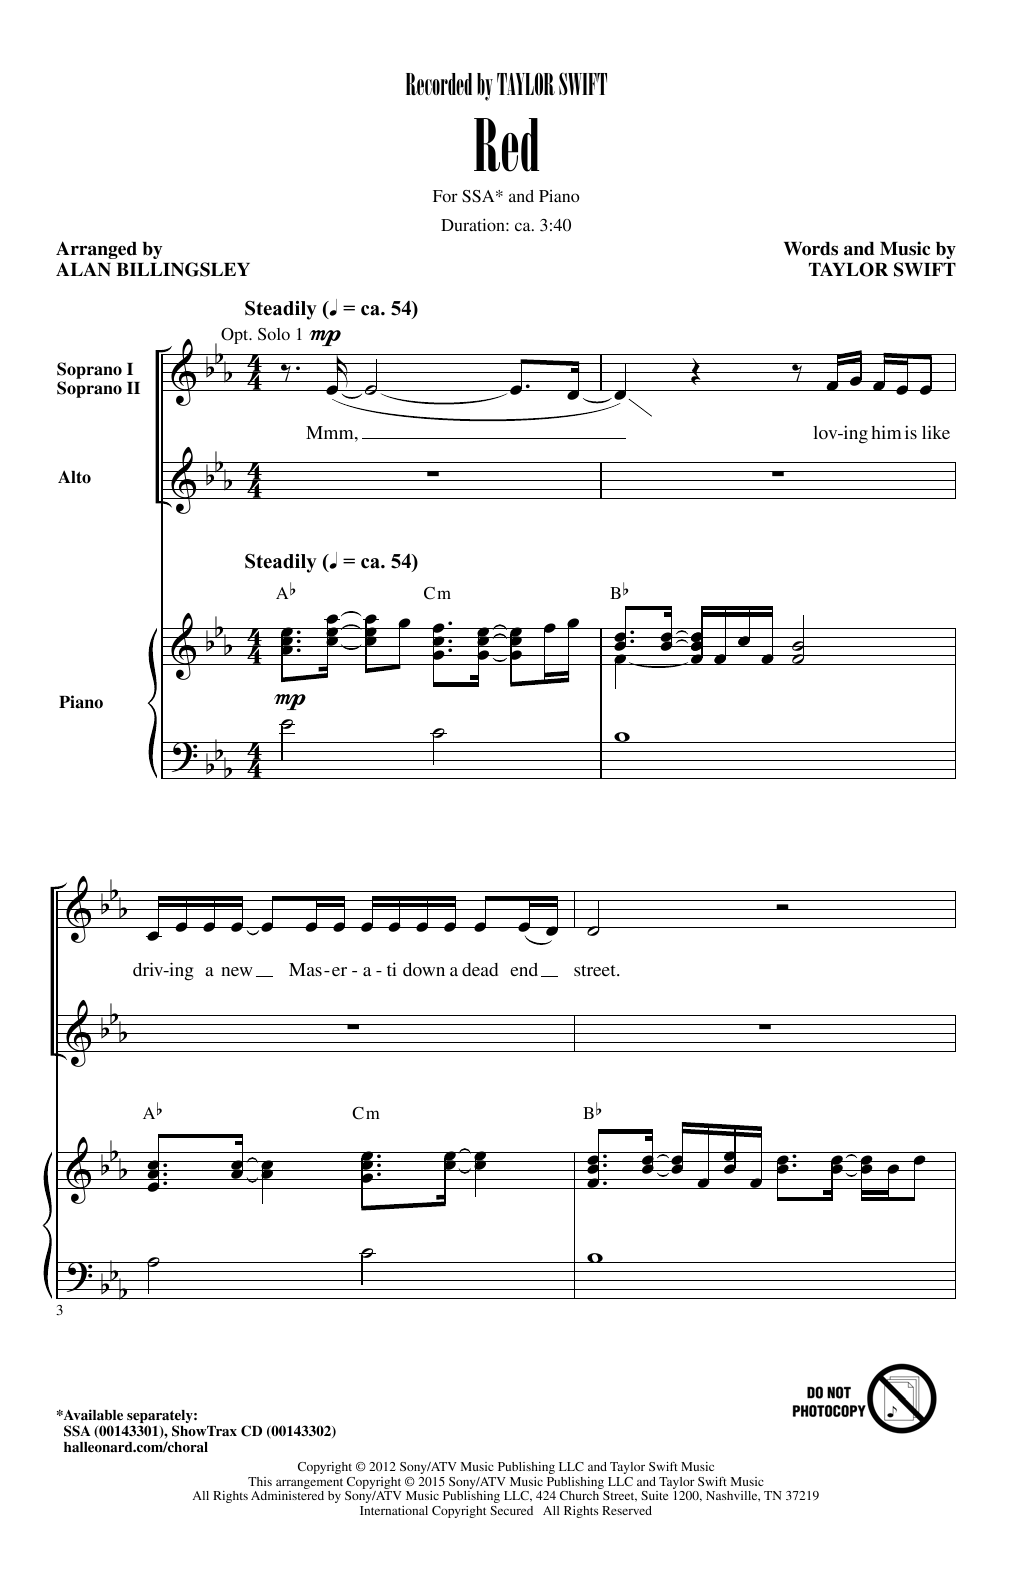 Alan Billingsley Red Sheet Music Notes & Chords for SSA - Download or Print PDF